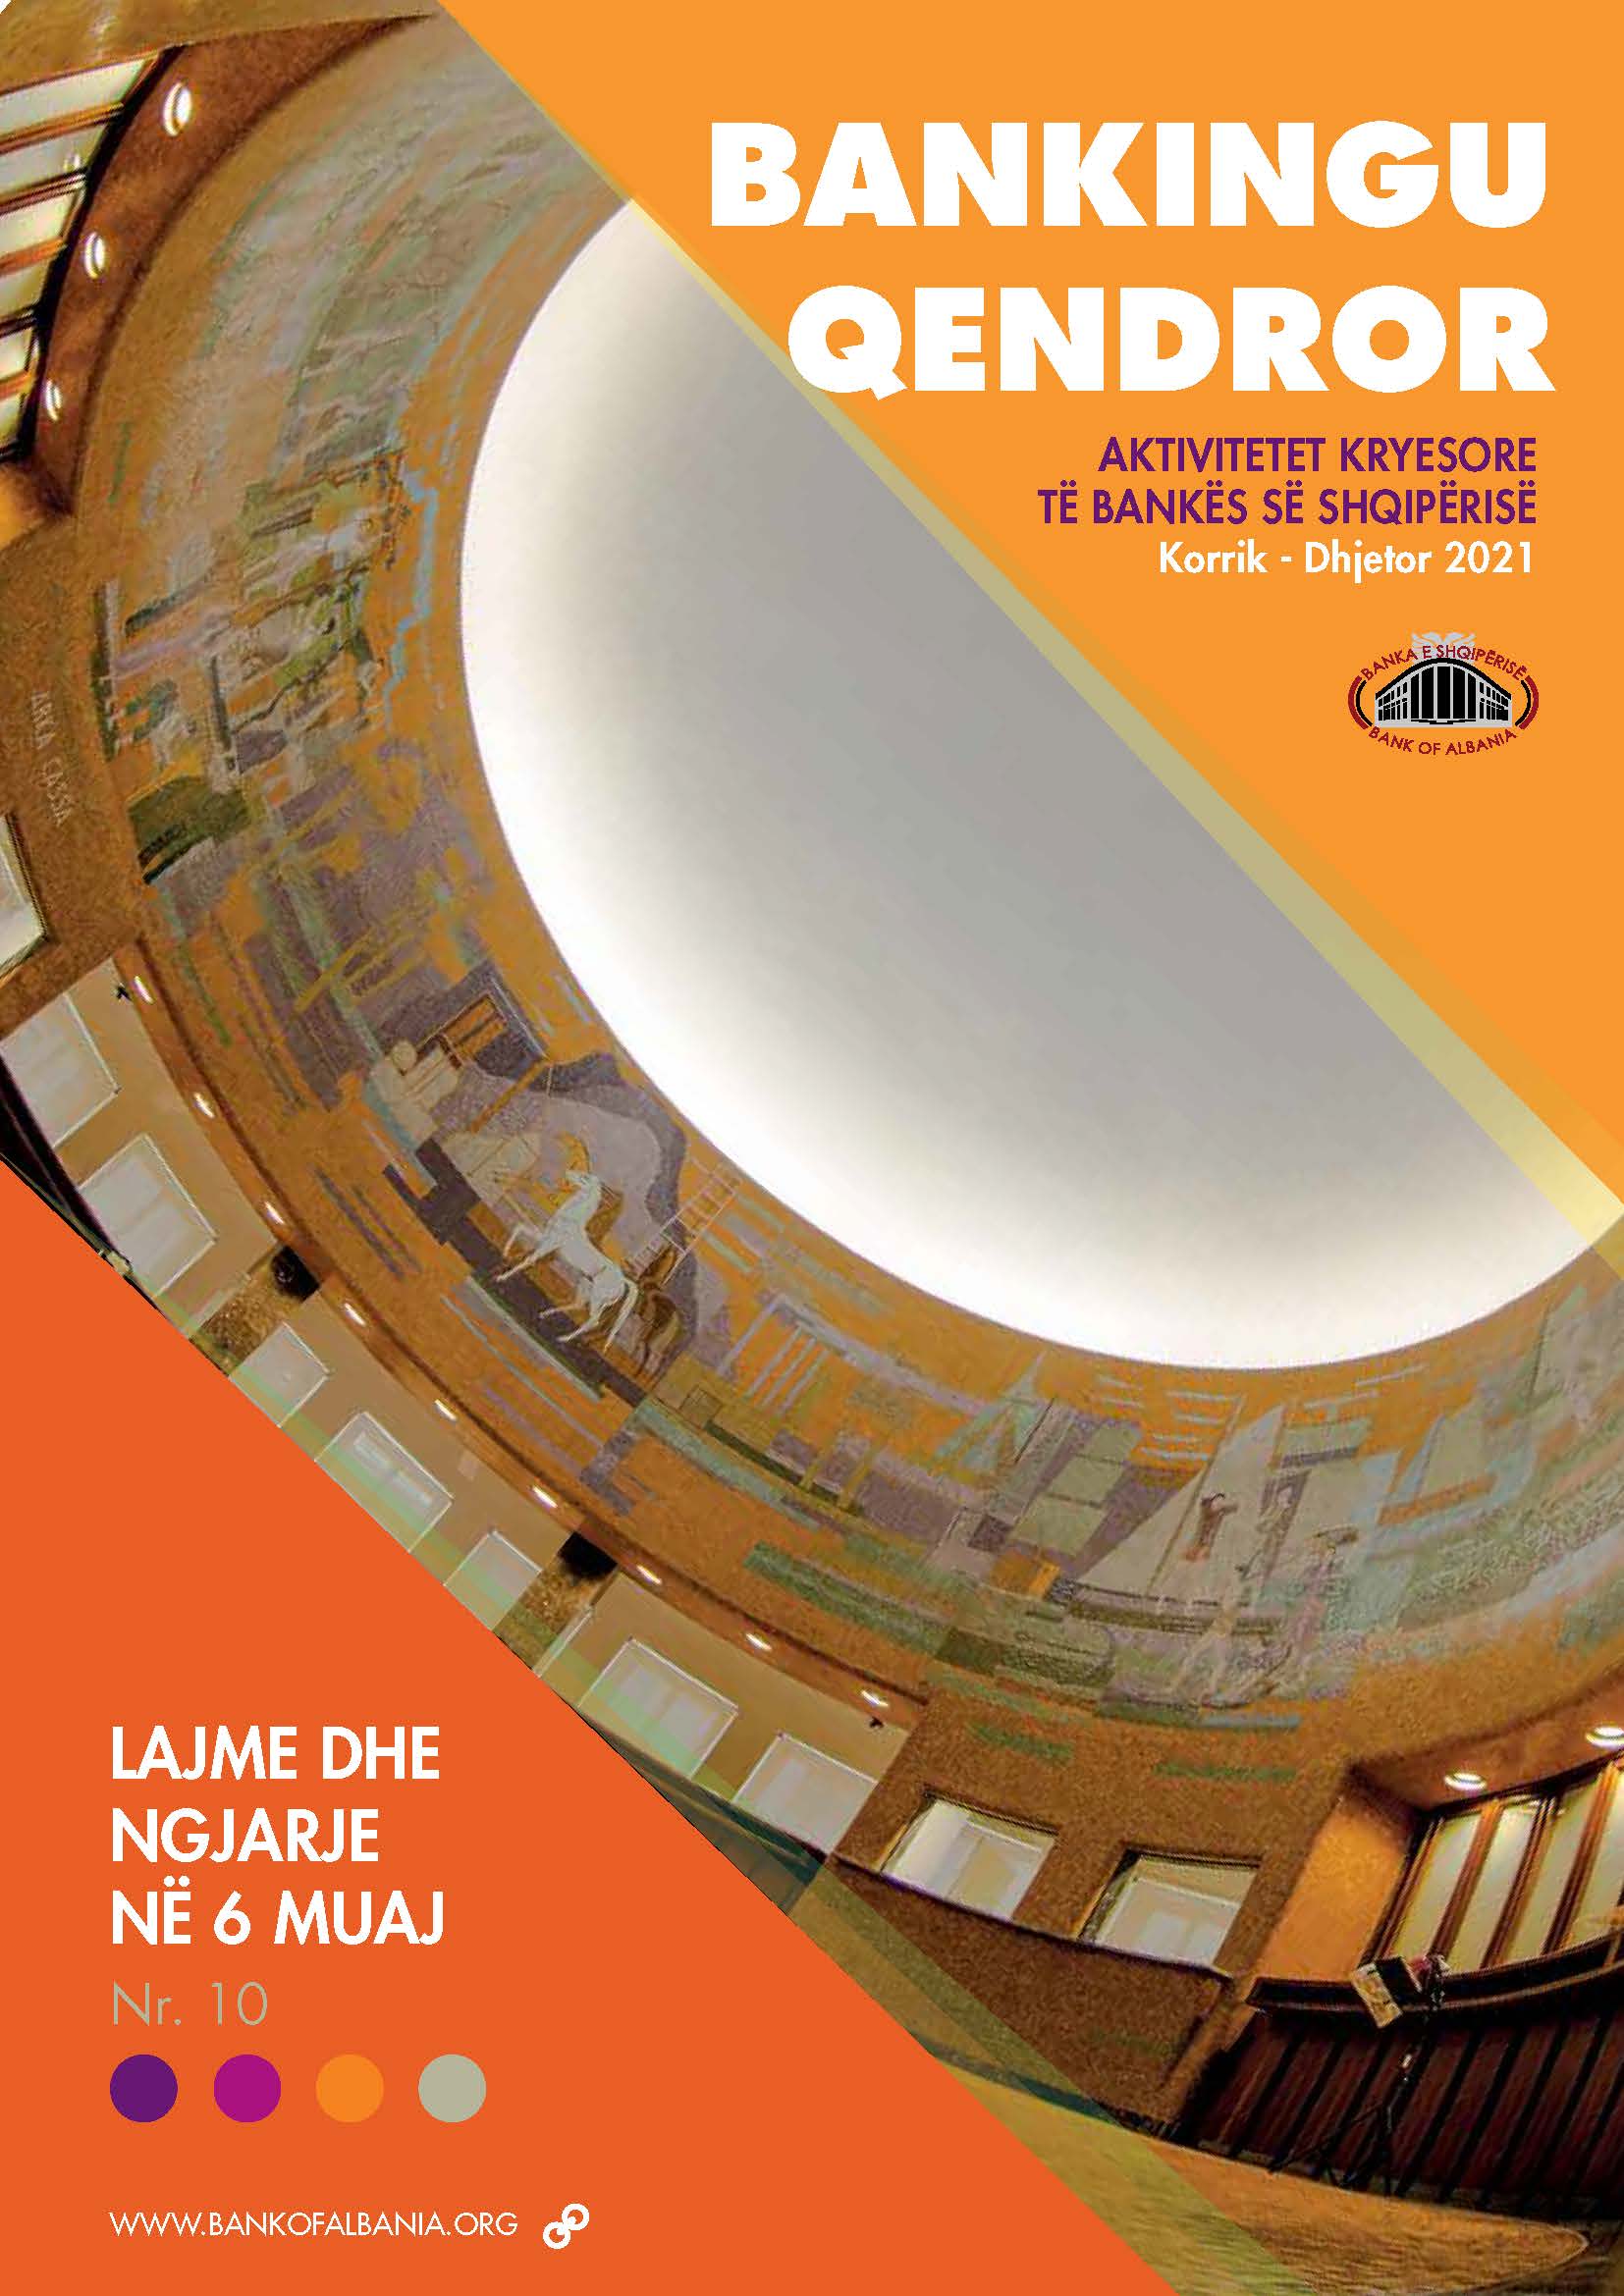 Central Banking magazine, July - December 2021